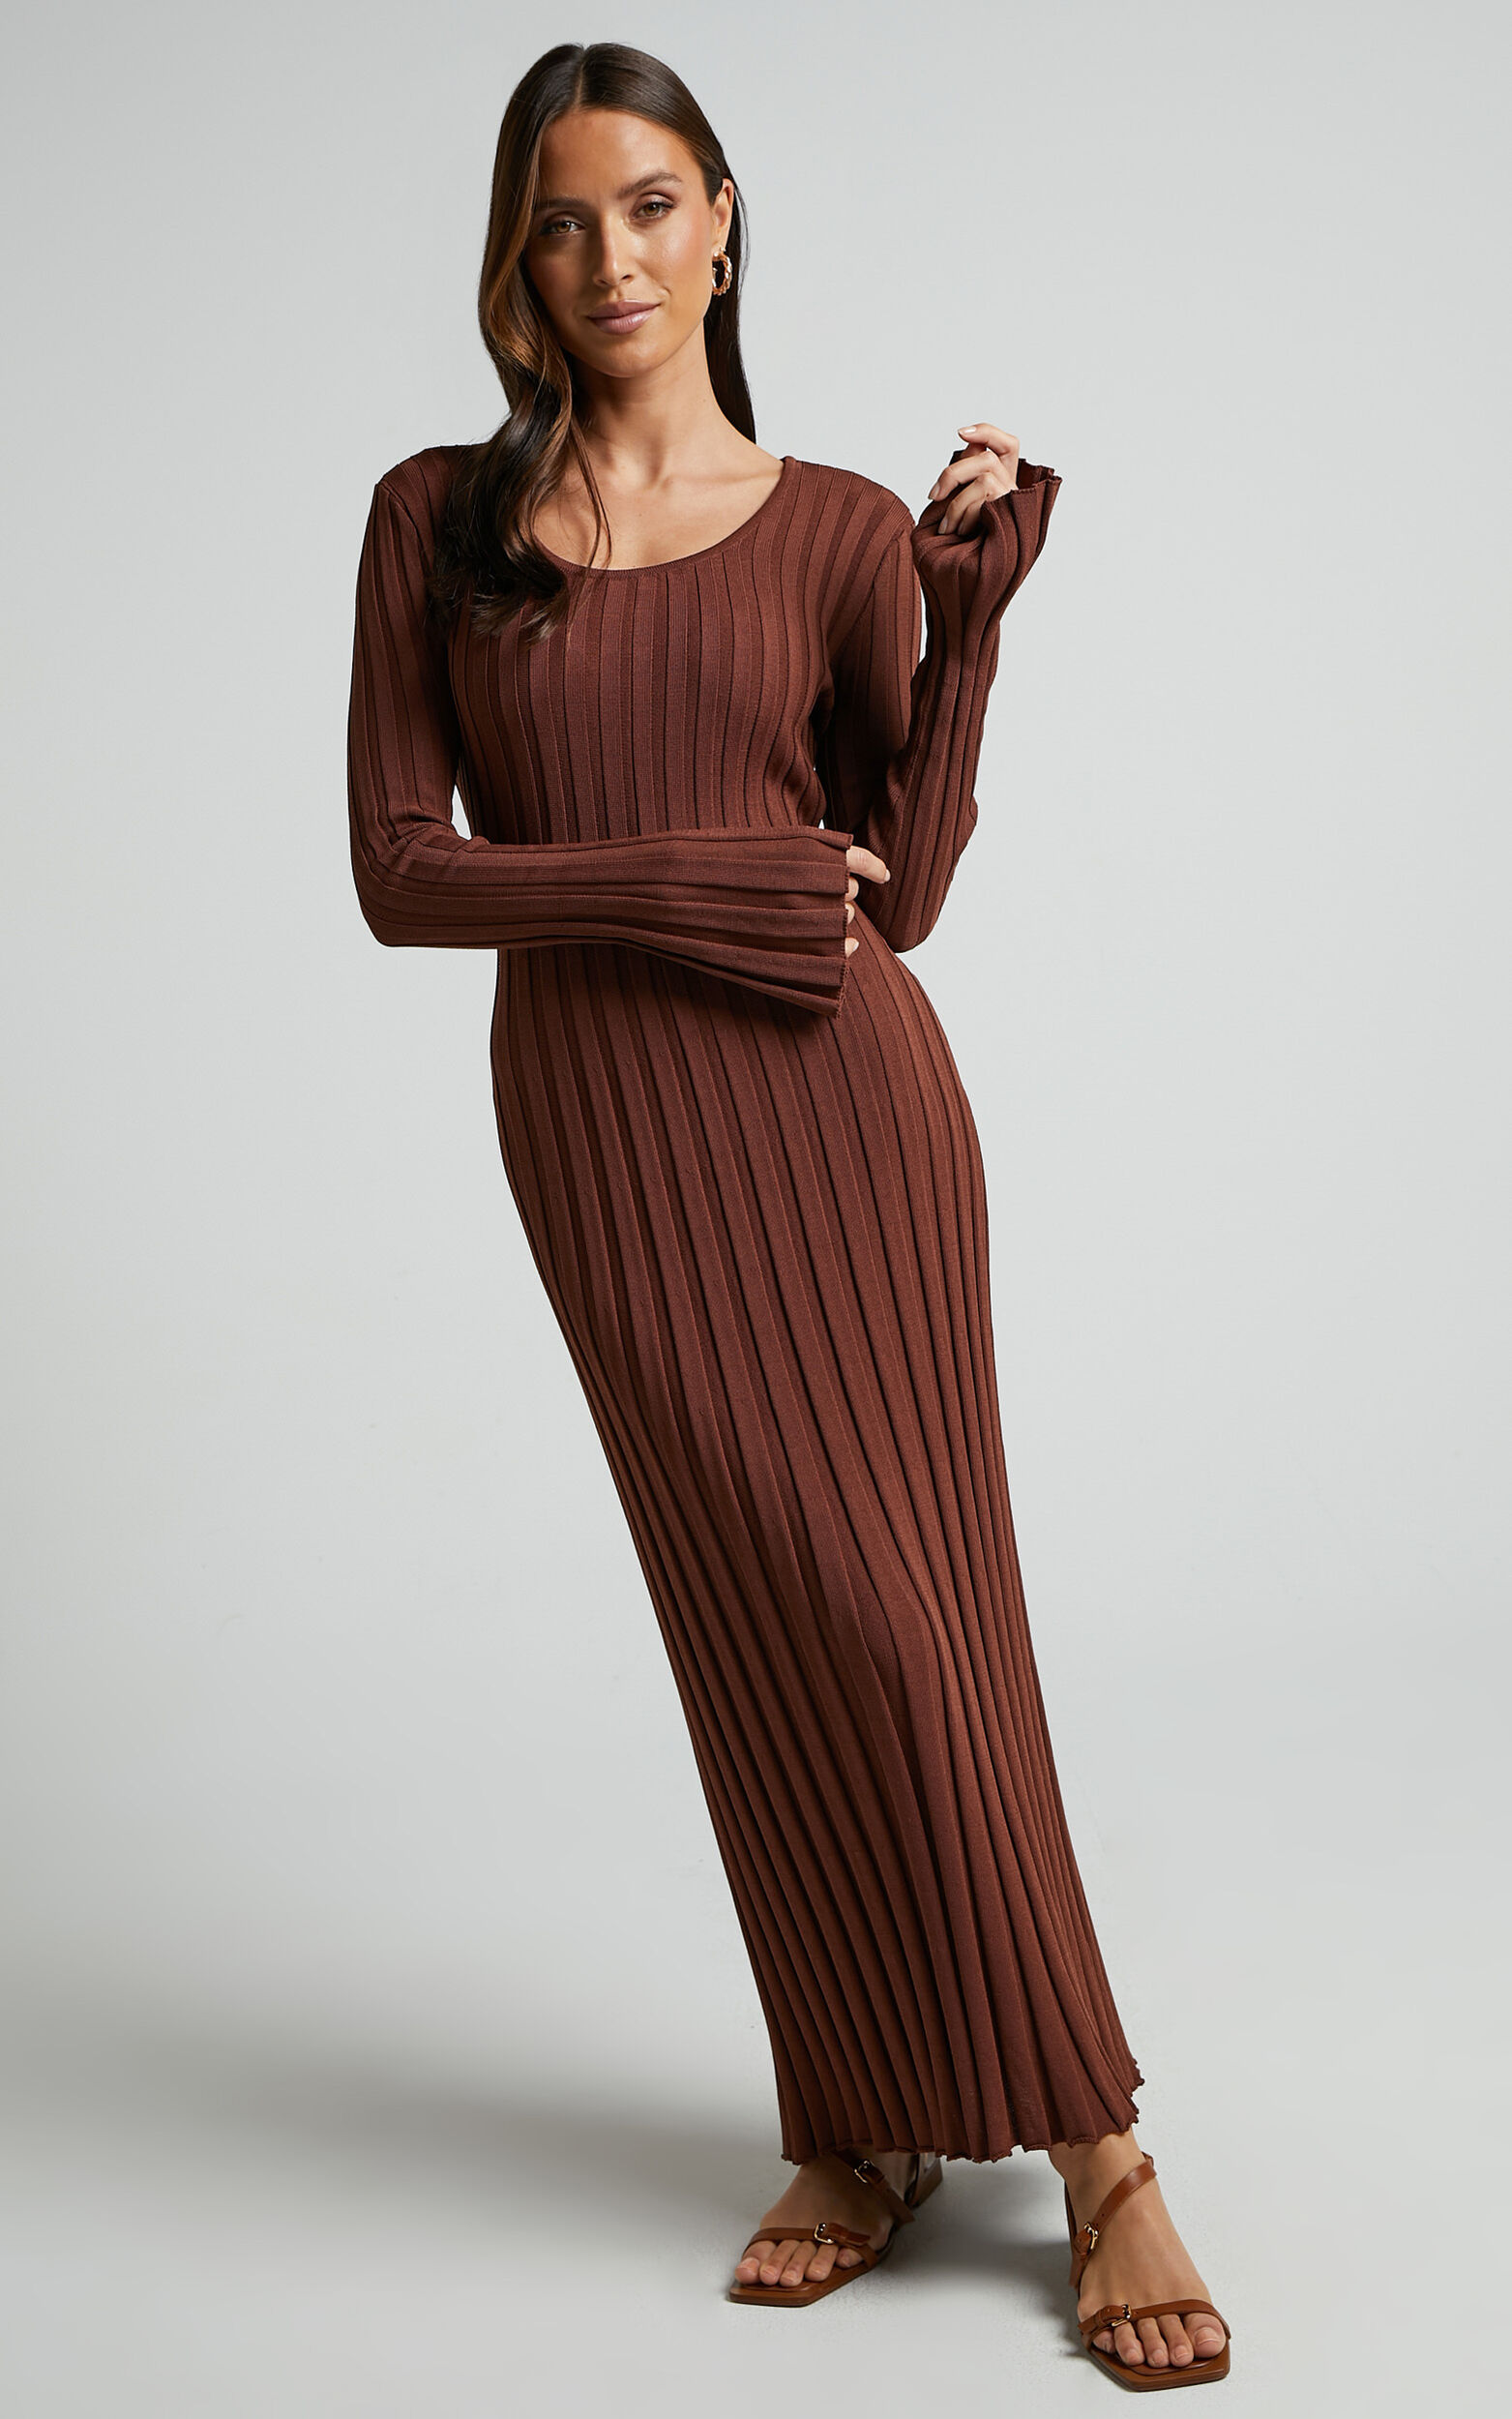 Blaire Midi Dress - Long Sleeve Tie Back Flare Dress in Chocolate ...